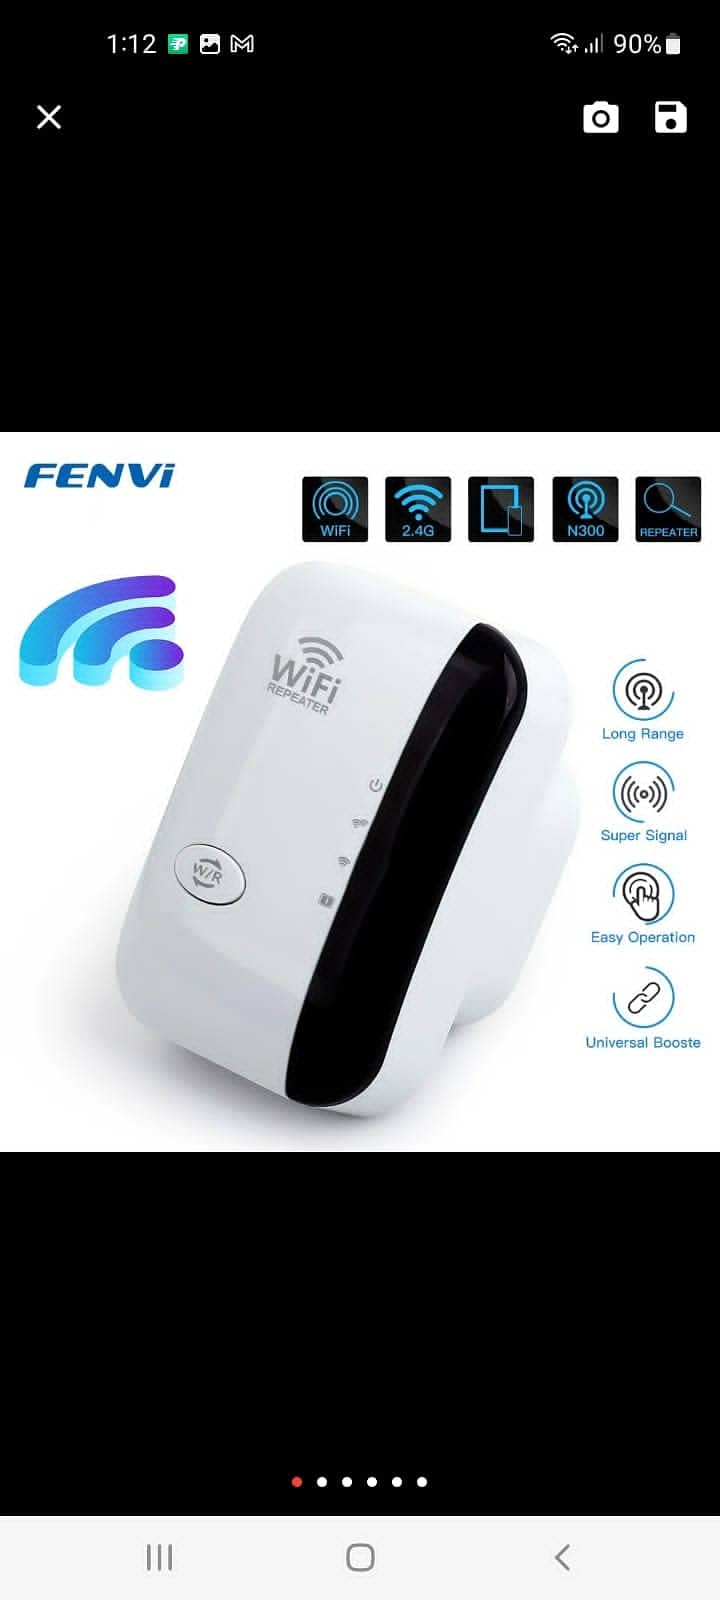 Firewall,Wireless,Reapter  802.11n Frequency 0